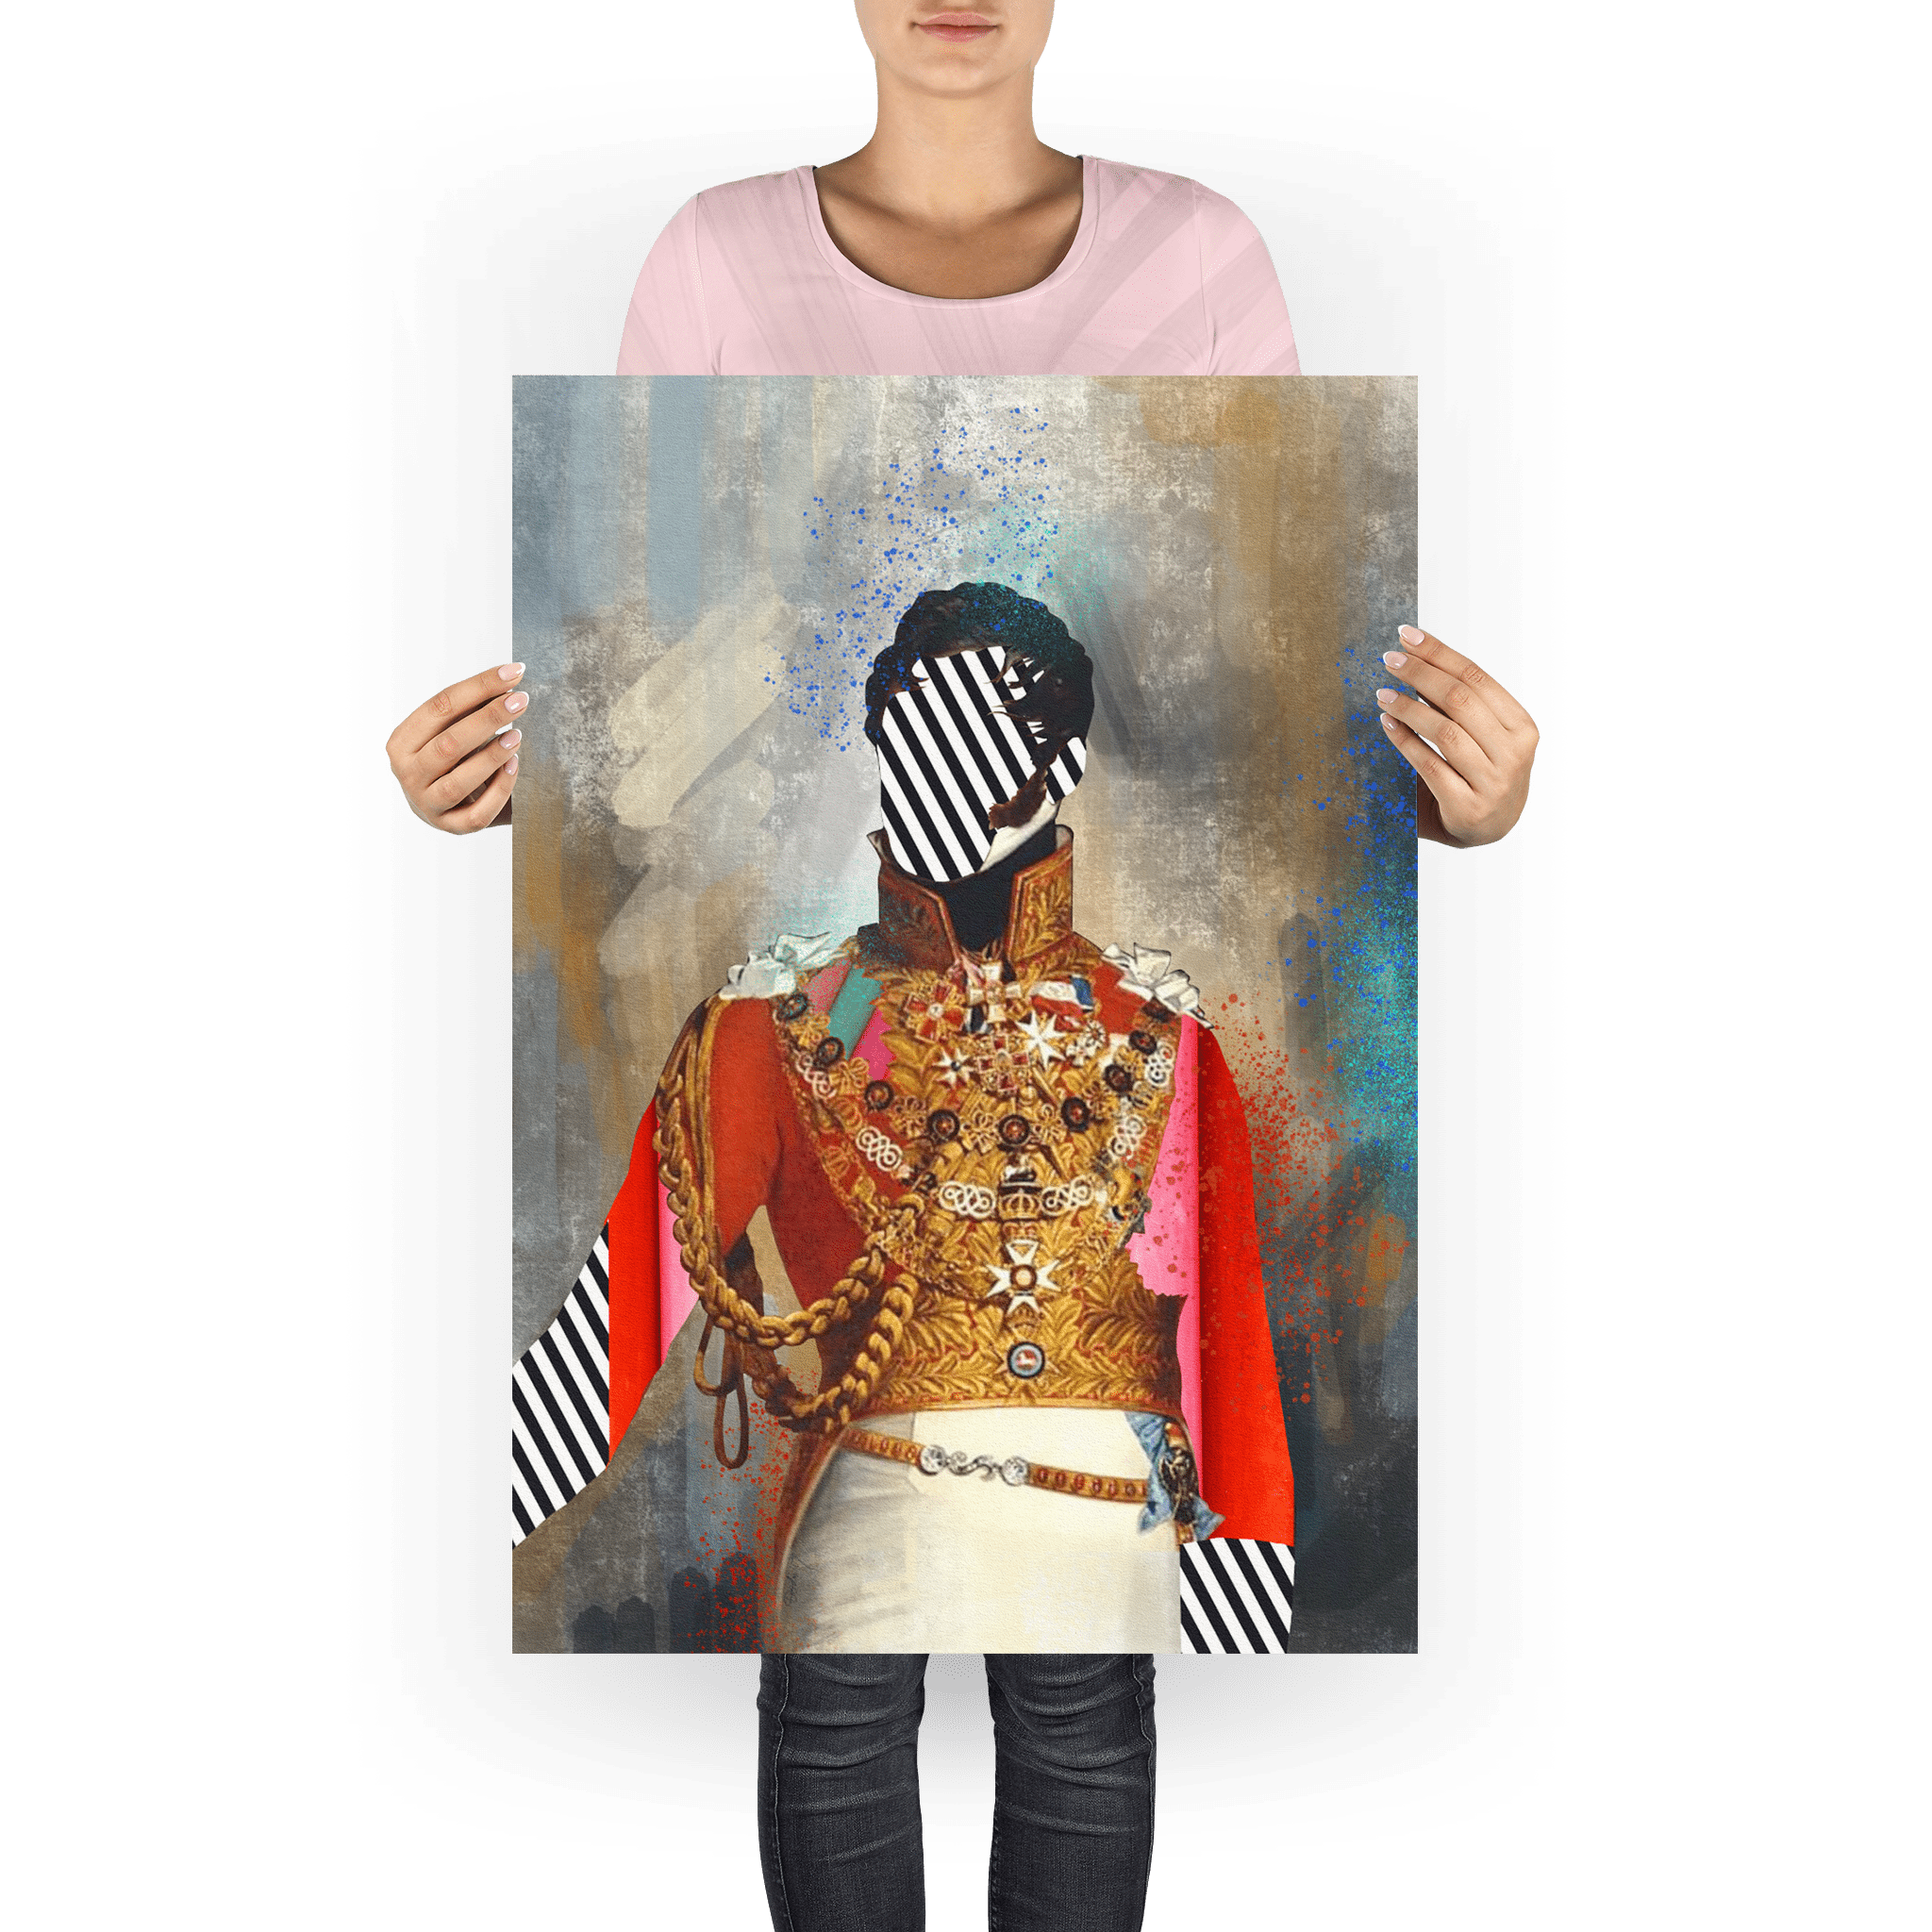 Prince Leopold A3 Print